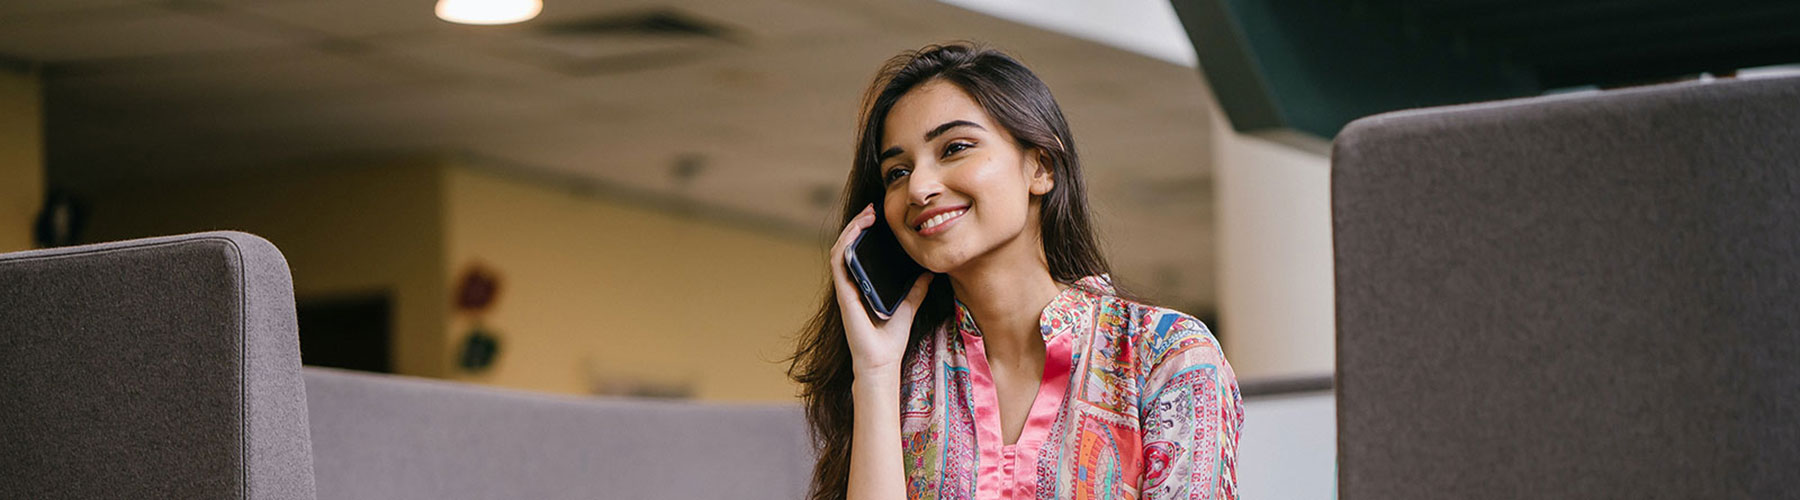 Smiling Woman in Floral Salwar Kameez Talking on Phone While Sitting